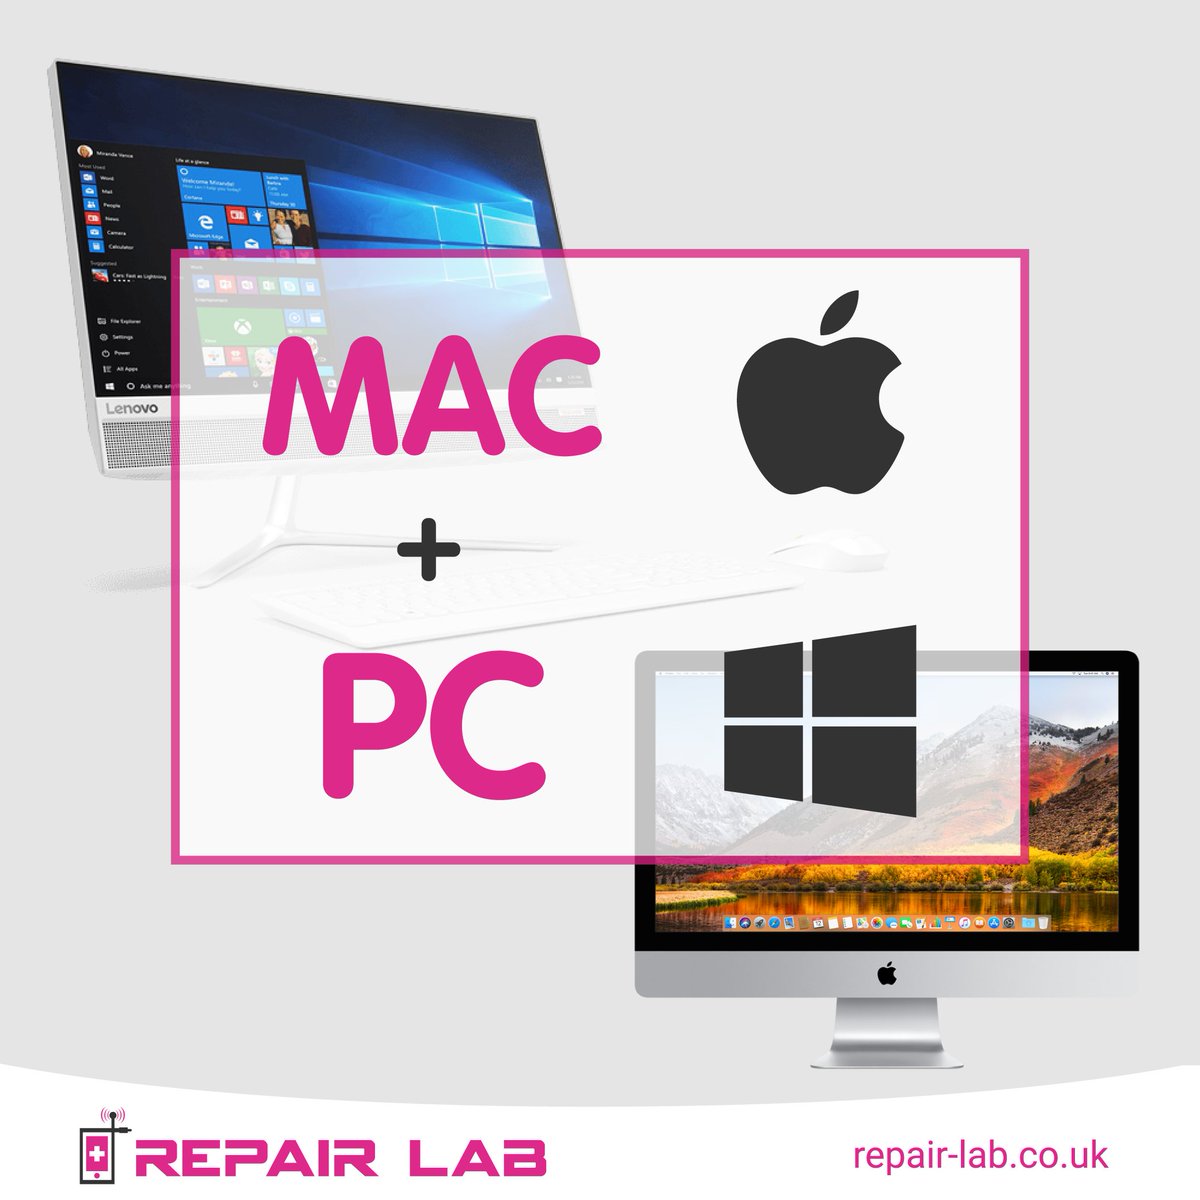 Running #AppleOS or #Windows - we can pretty much guarantee to fix your laptop or desktop! 🤓

👨🏻‍🎓1︎⃣0︎⃣% #STUDENTDISCOUNT (T&Cs Apply) 👩🏻‍🎓 

#Windows #Mac #ComputerRepair #Leeds #Kirkstall #PCRepairLeeds #LeedsStudent #Ilkley #ComputerRepairLeeds #PCRepairYorkshire…